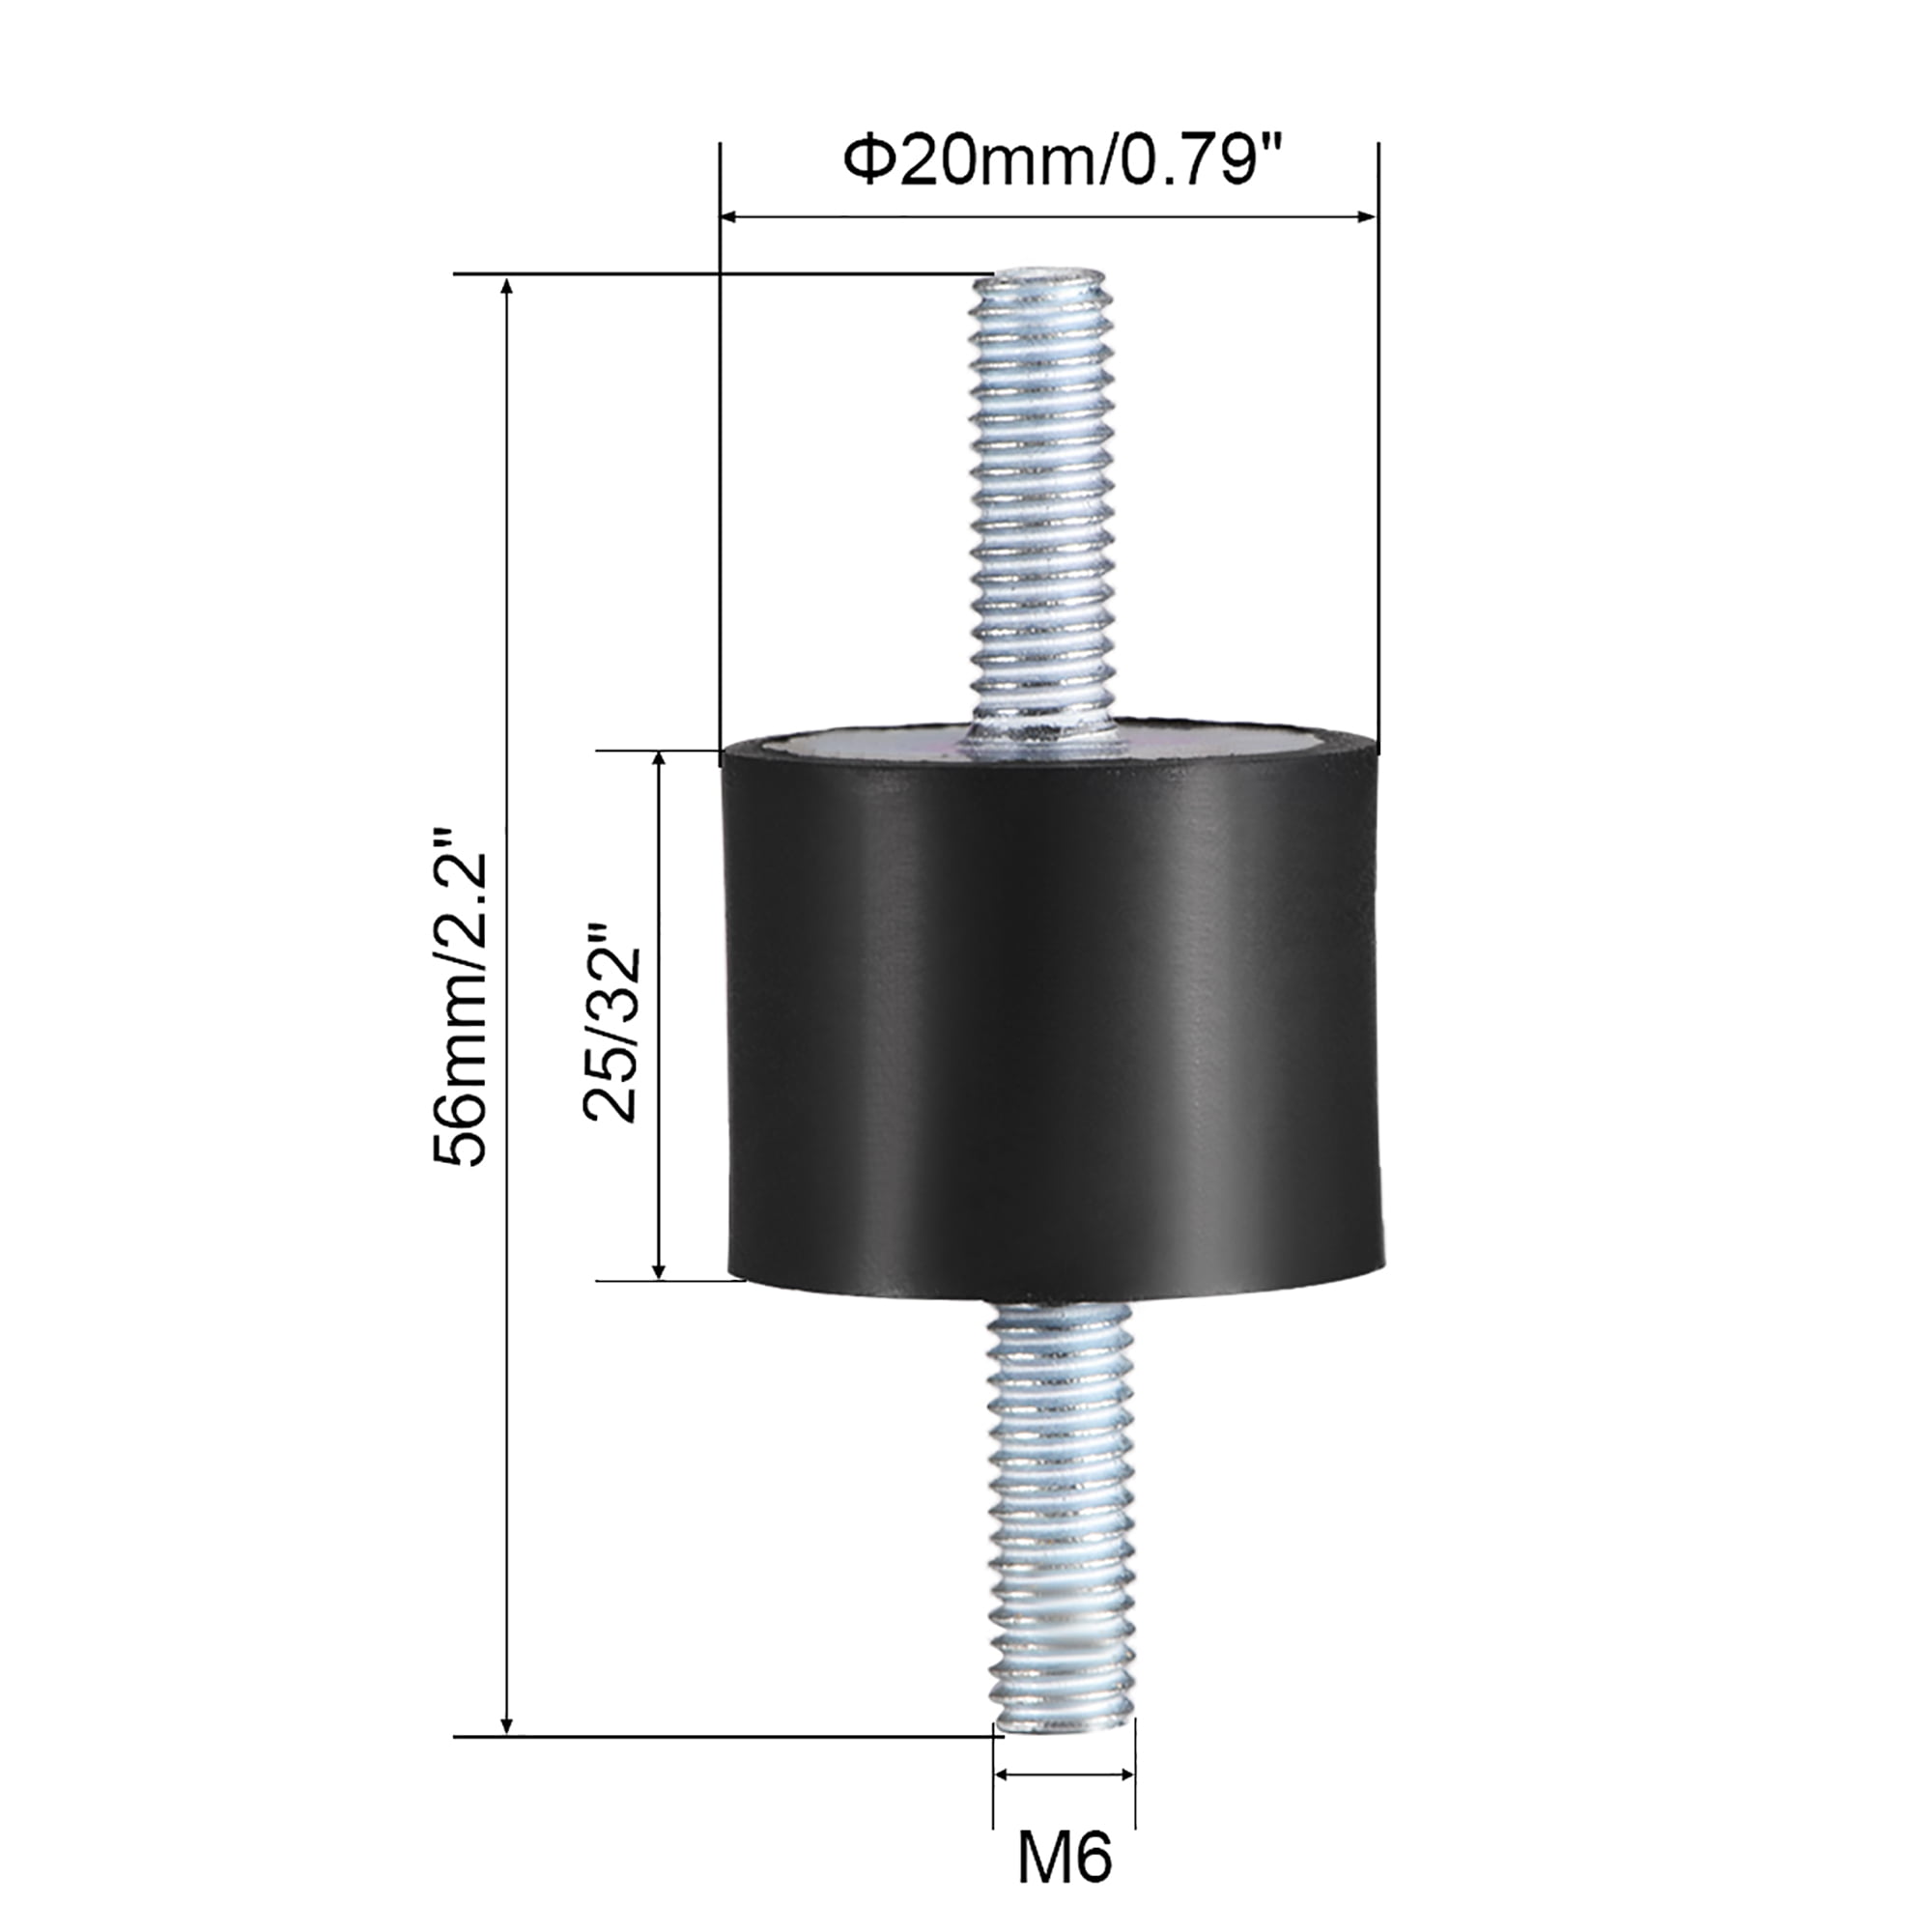 ac condenser fan motor rubber vibration isolator mounts